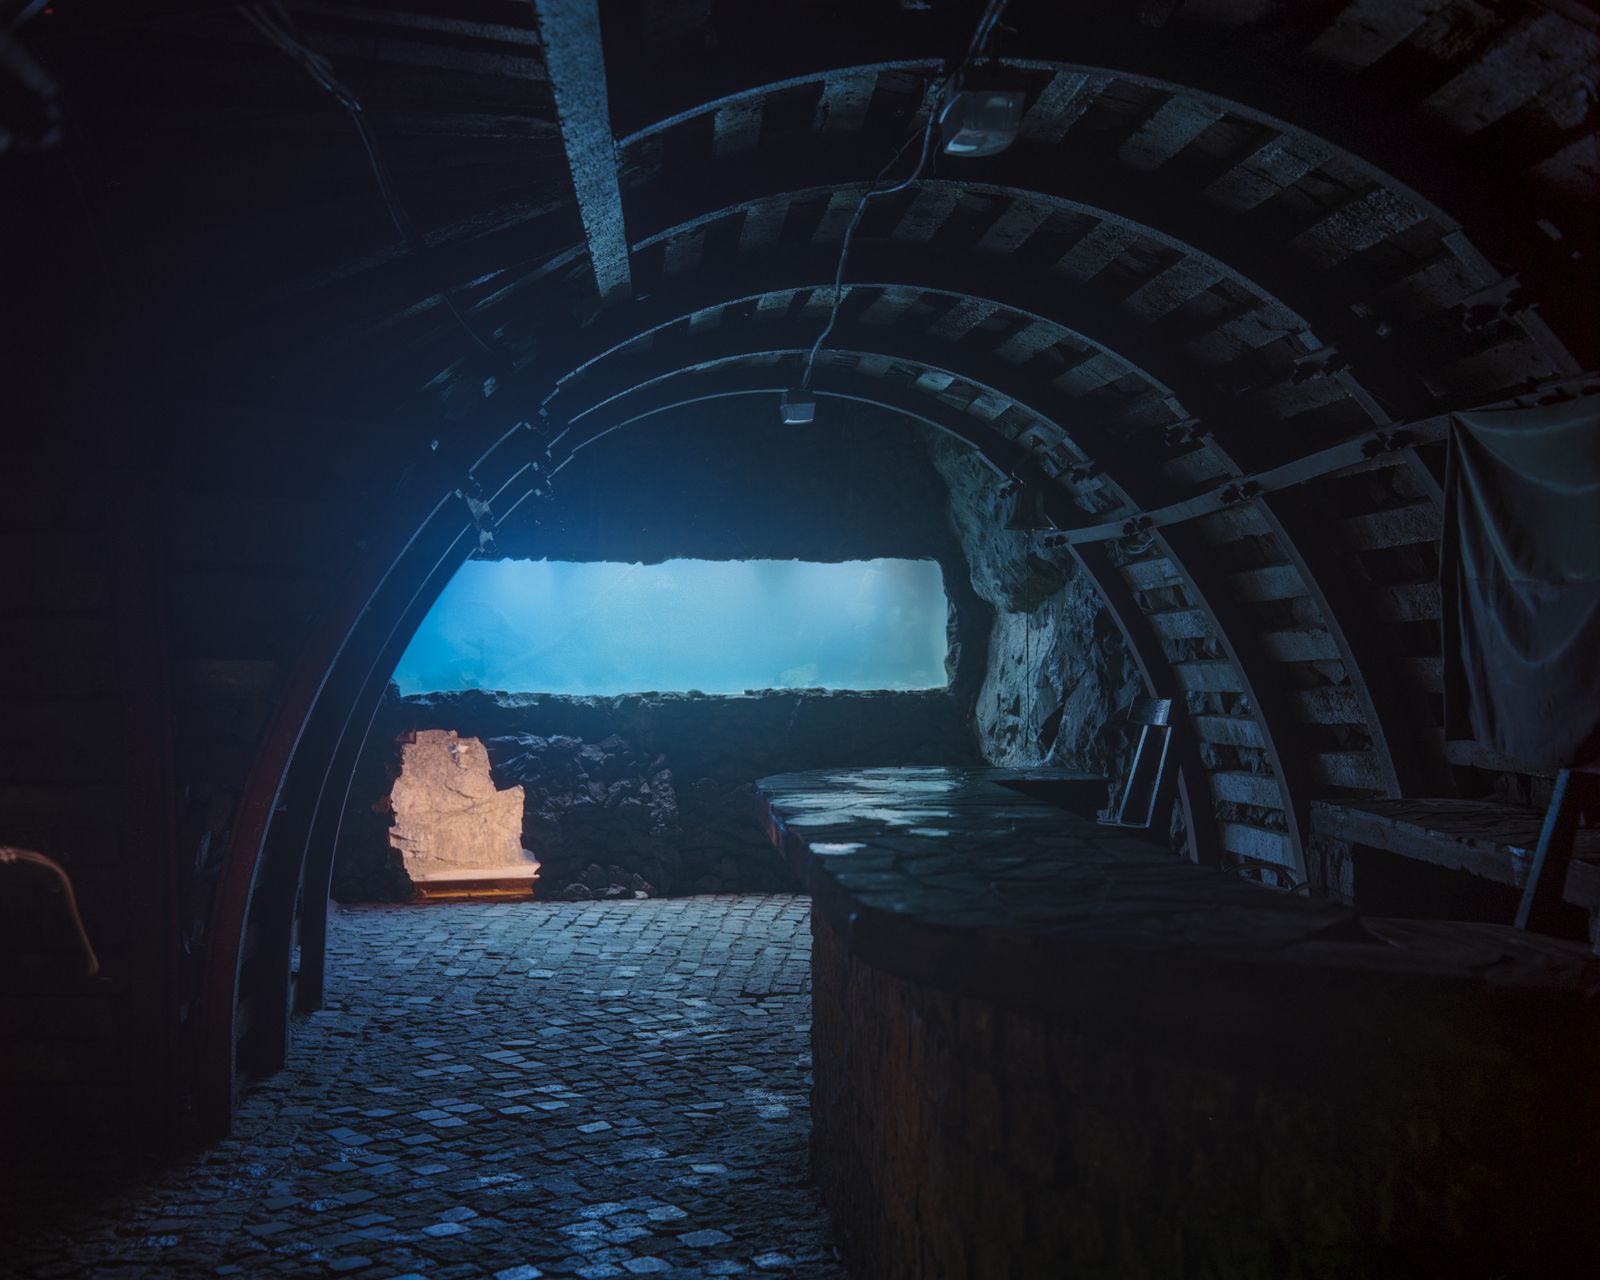 © Michał Sierakowski - Piranha’s aquarium, adit 9 of former uranium mine; Kowary, 2015